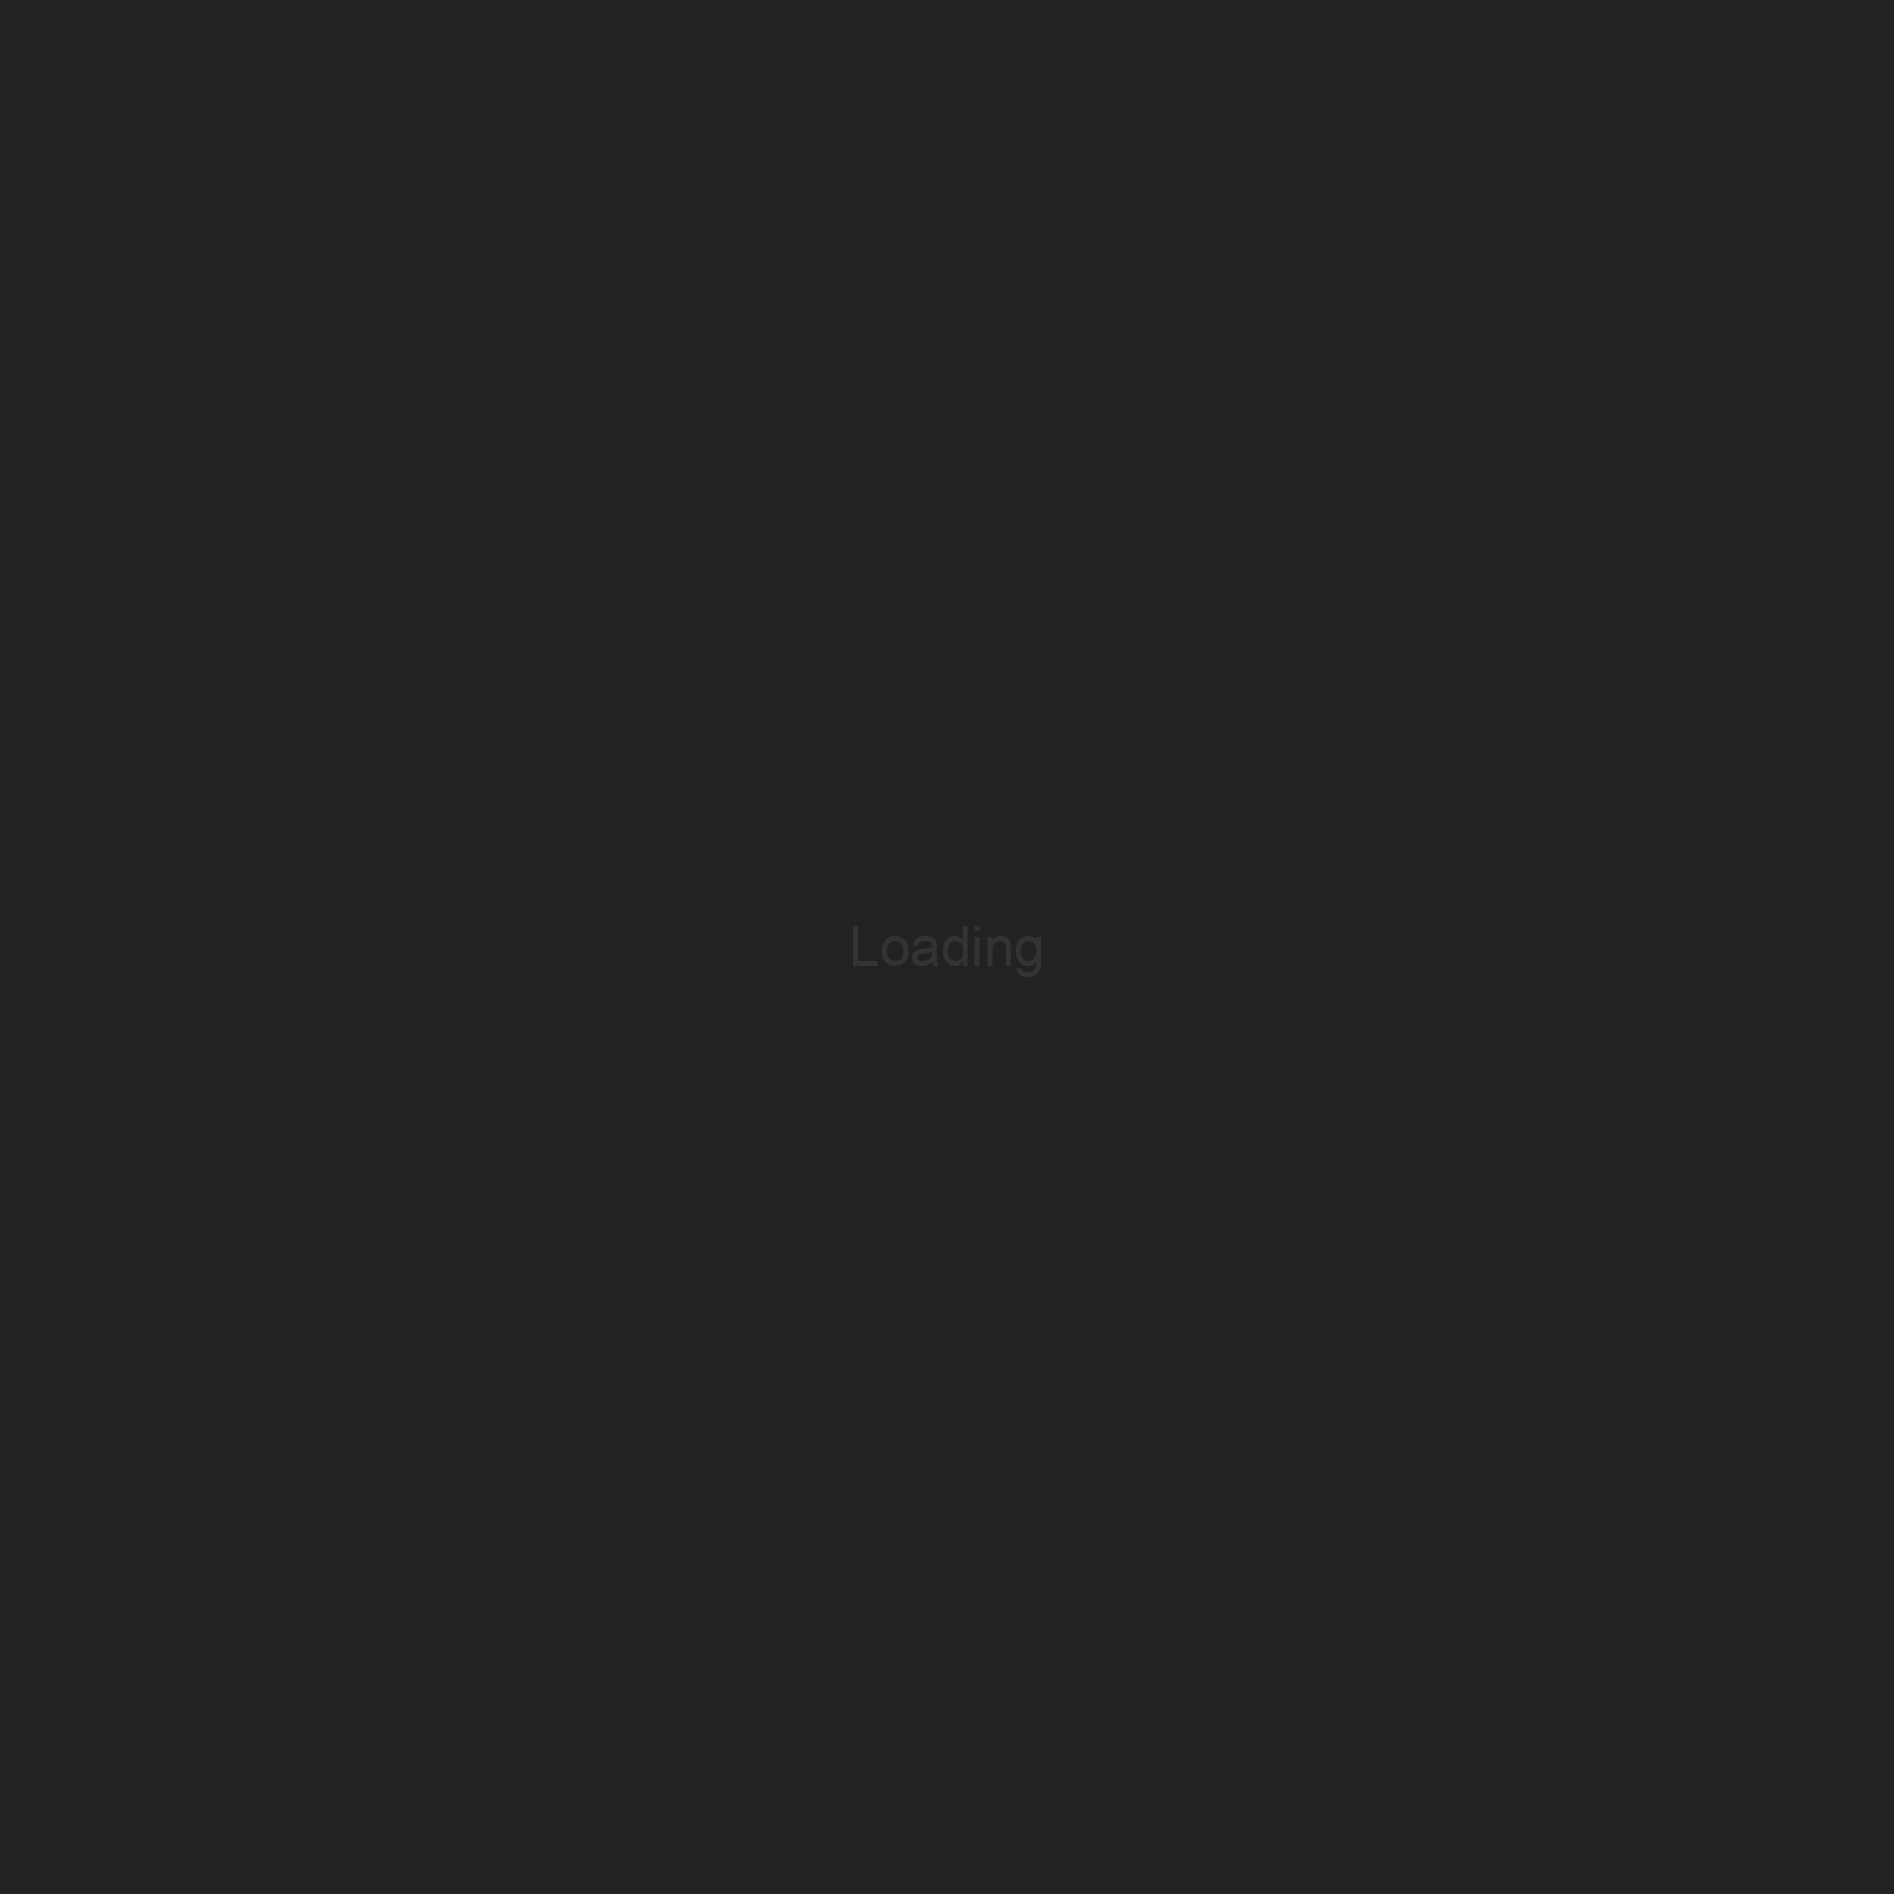 Headphone Nebula - 2x Drizzled, Marc Mantha